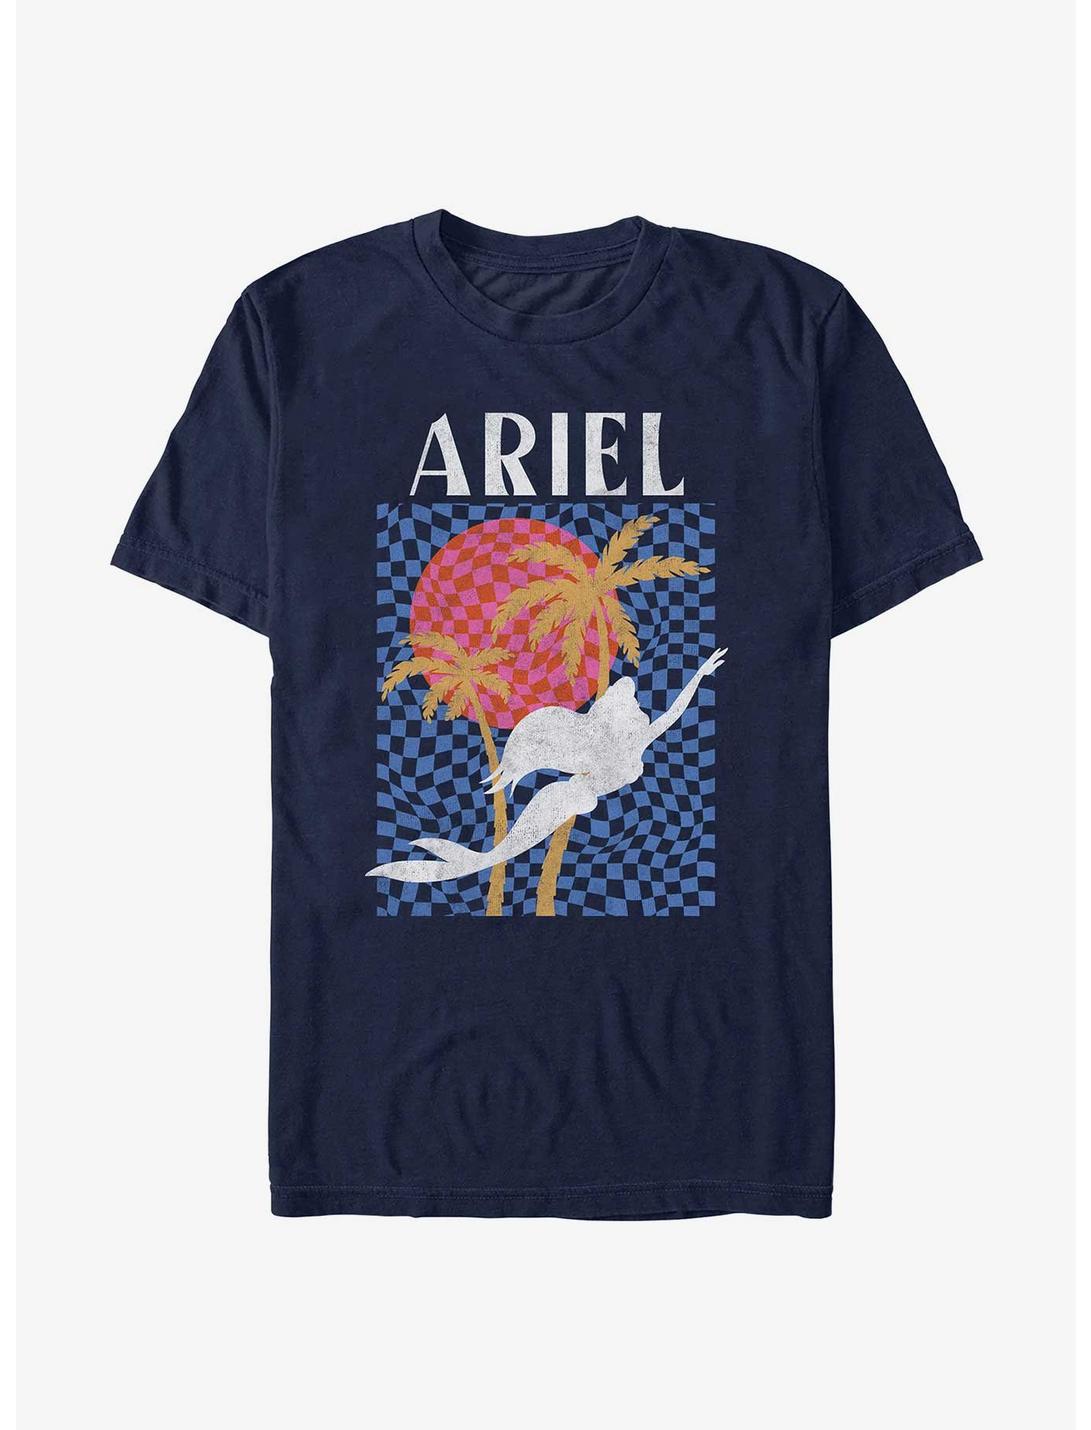 Disney The Little Mermaid Ariel Surf Style Silhouette T-Shirt, NAVY, hi-res